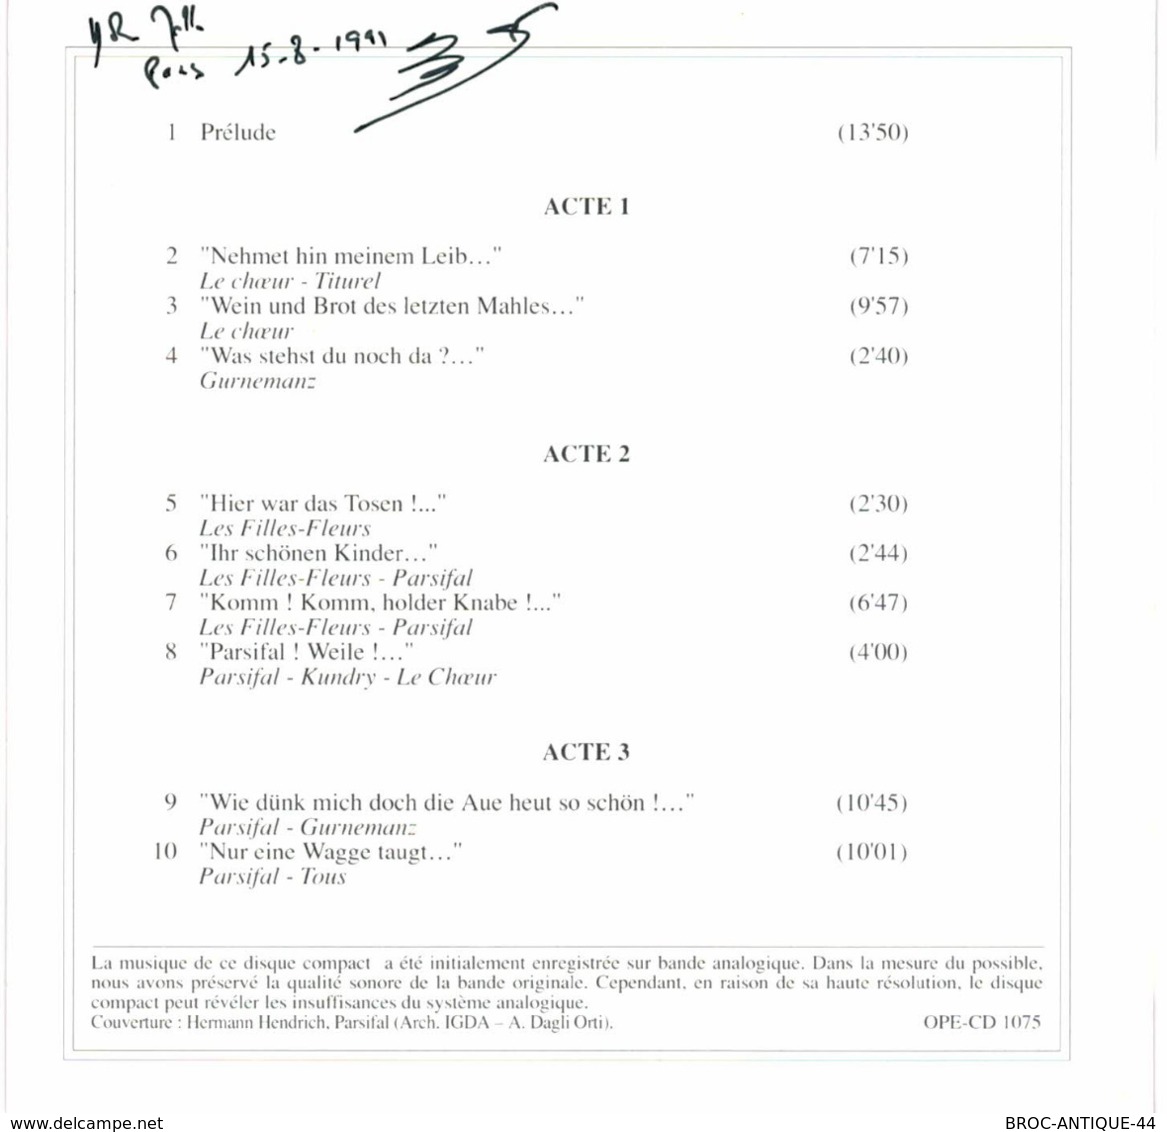 CD N°447 - LES GENIES DE L' OPERA - WAGNER - PARSIFAL - COMPILATION - Oper & Operette